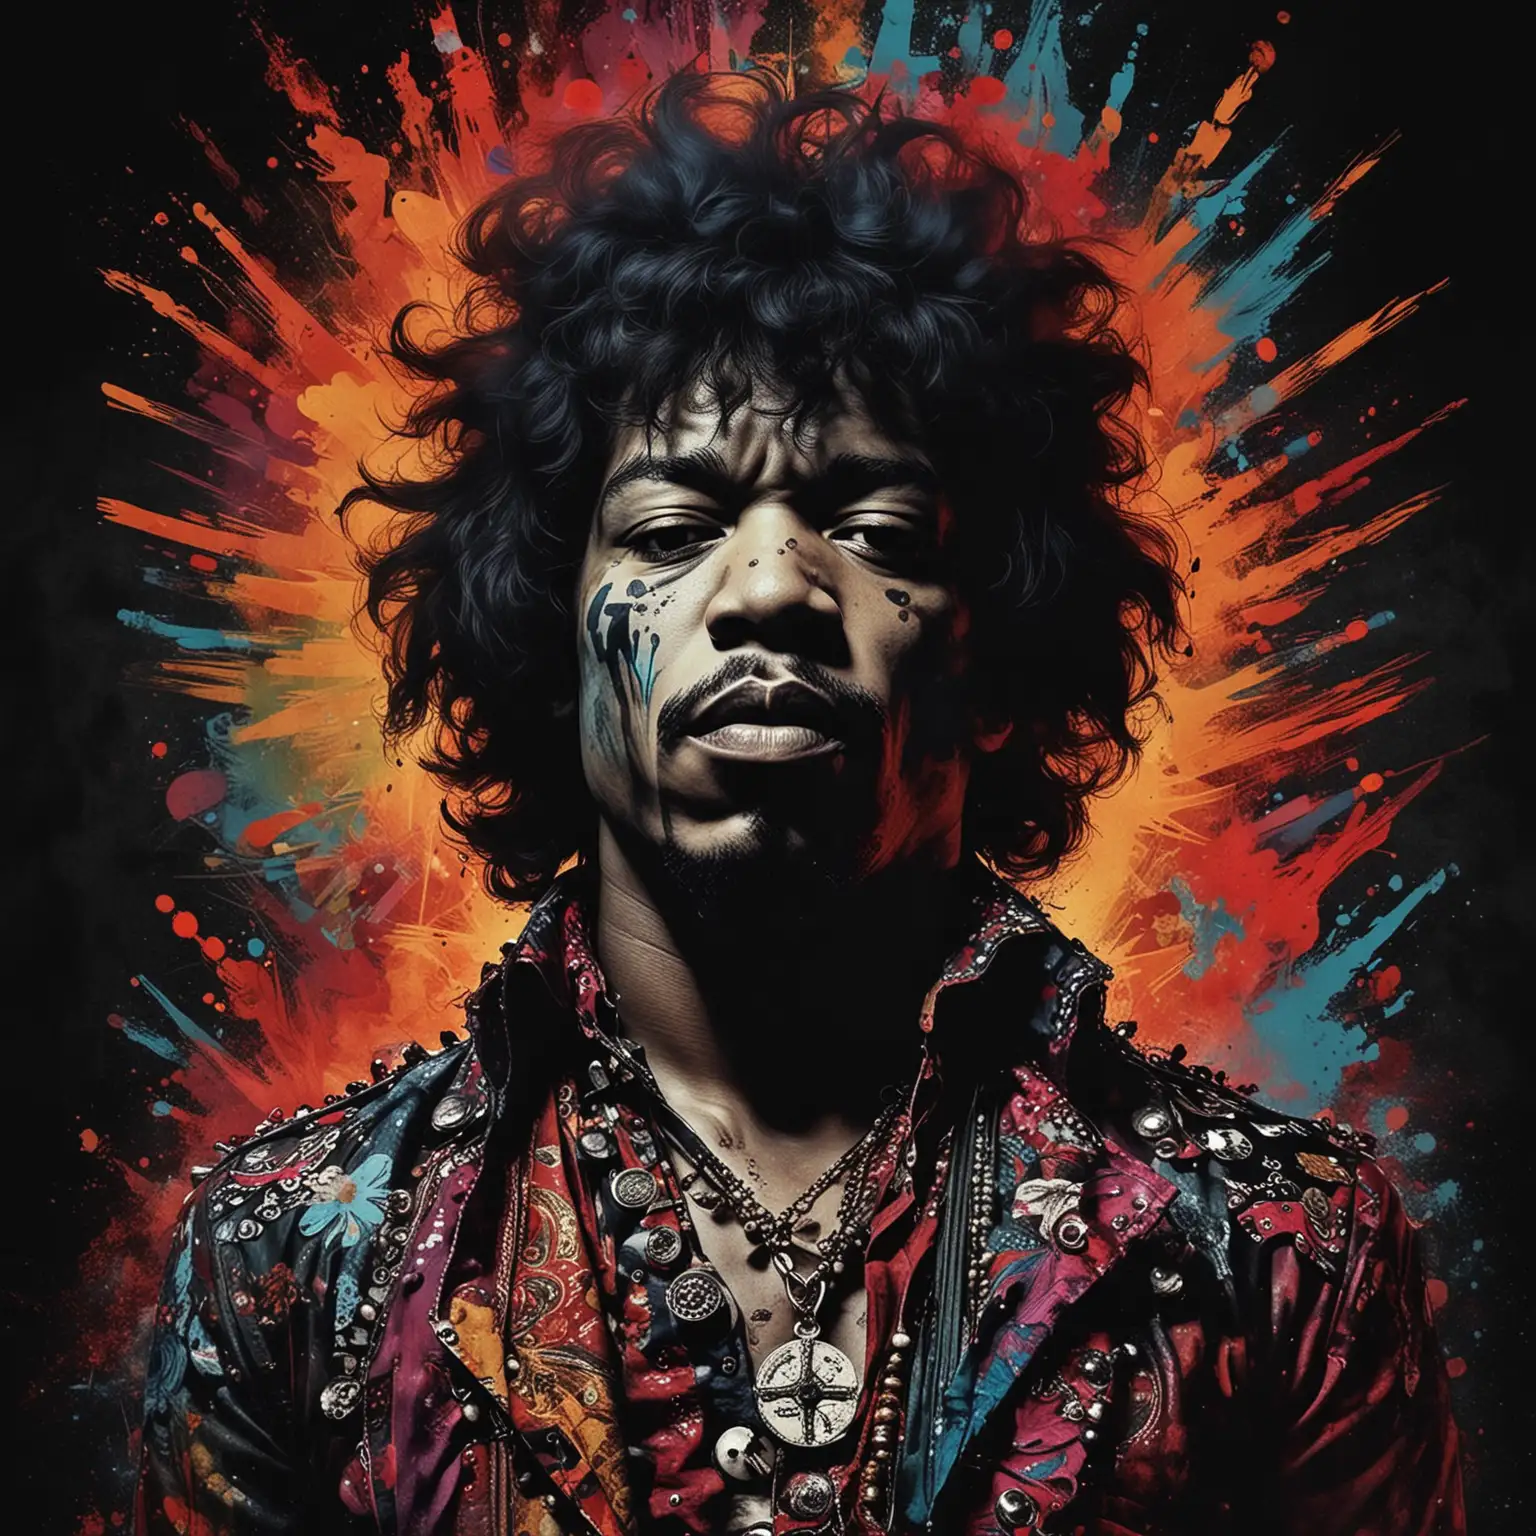 psychedelic image of Jimi Hendrix trash polka style